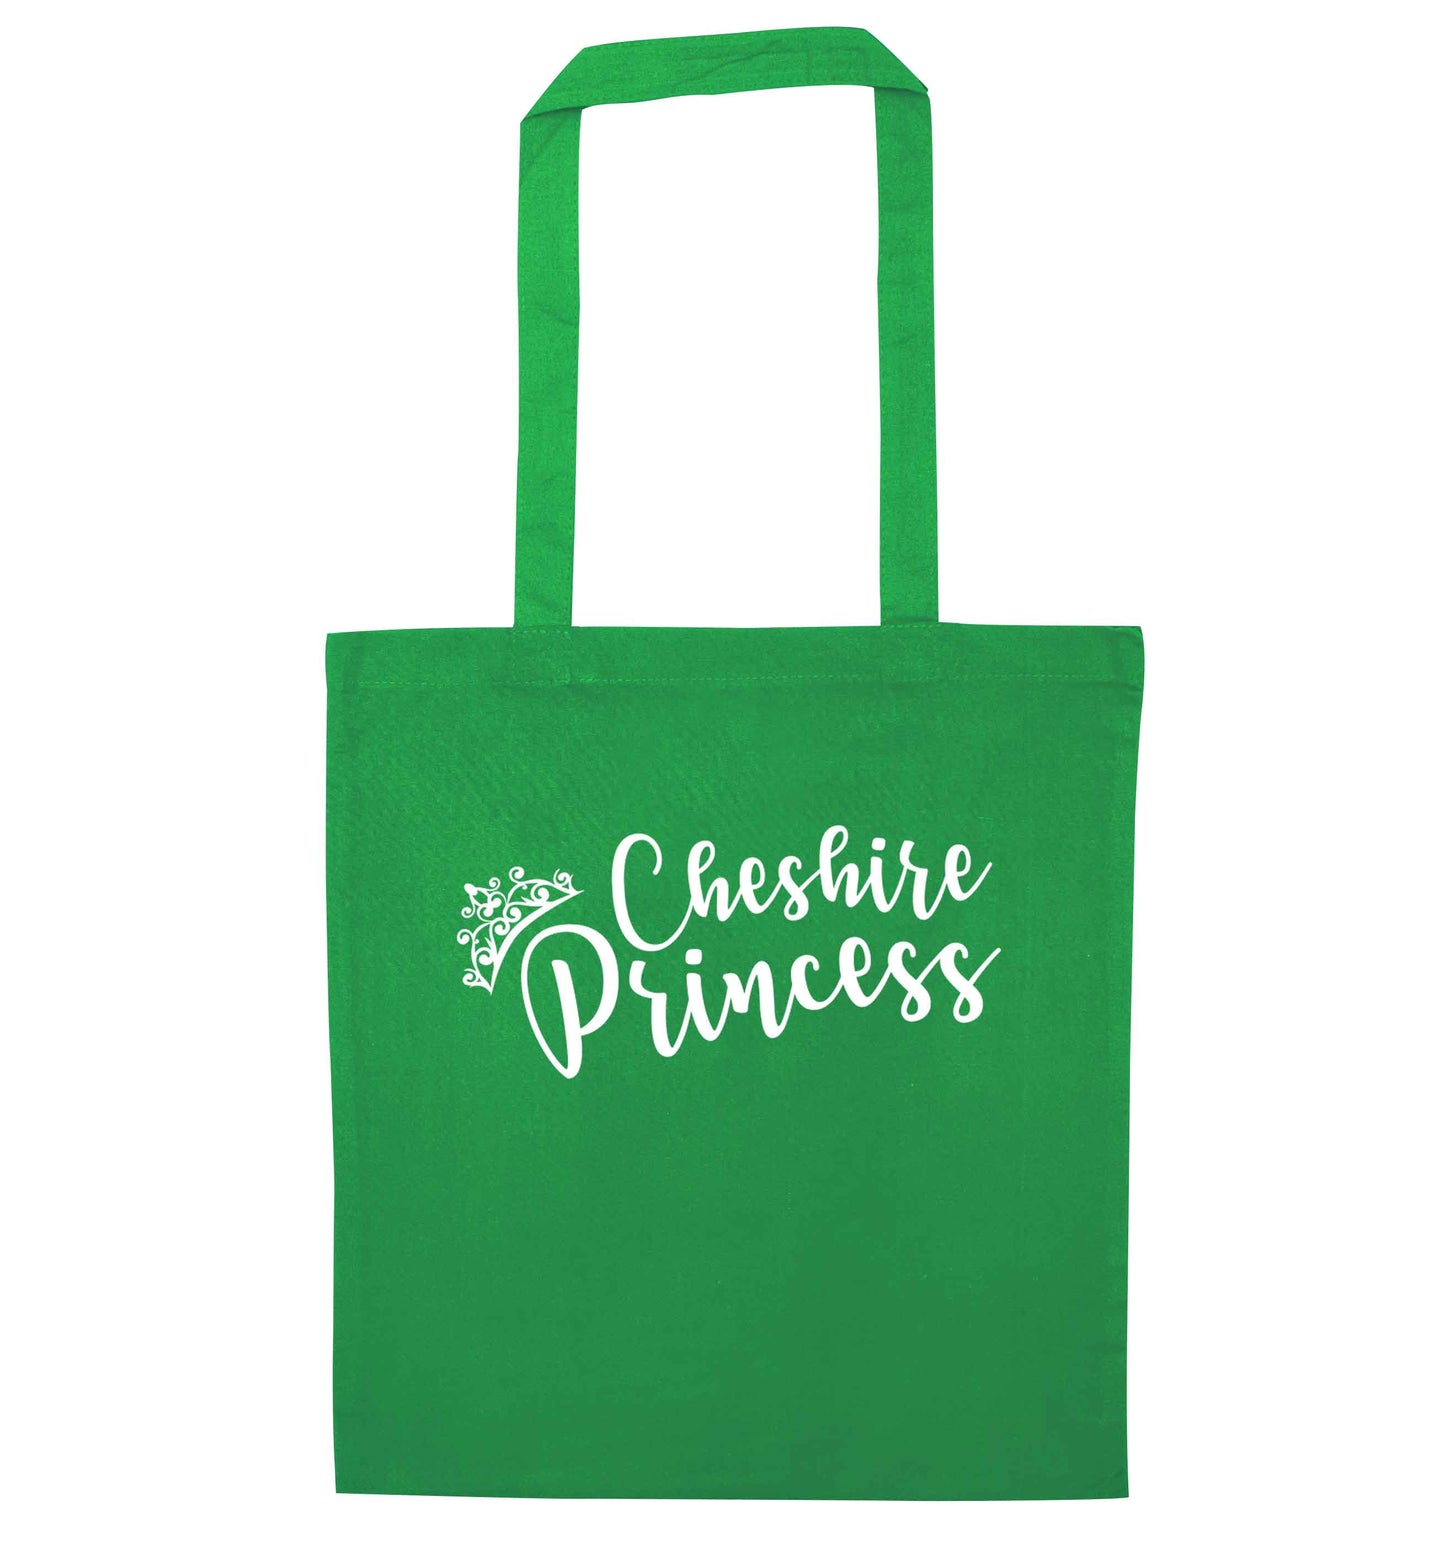 Cheshire princess green tote bag